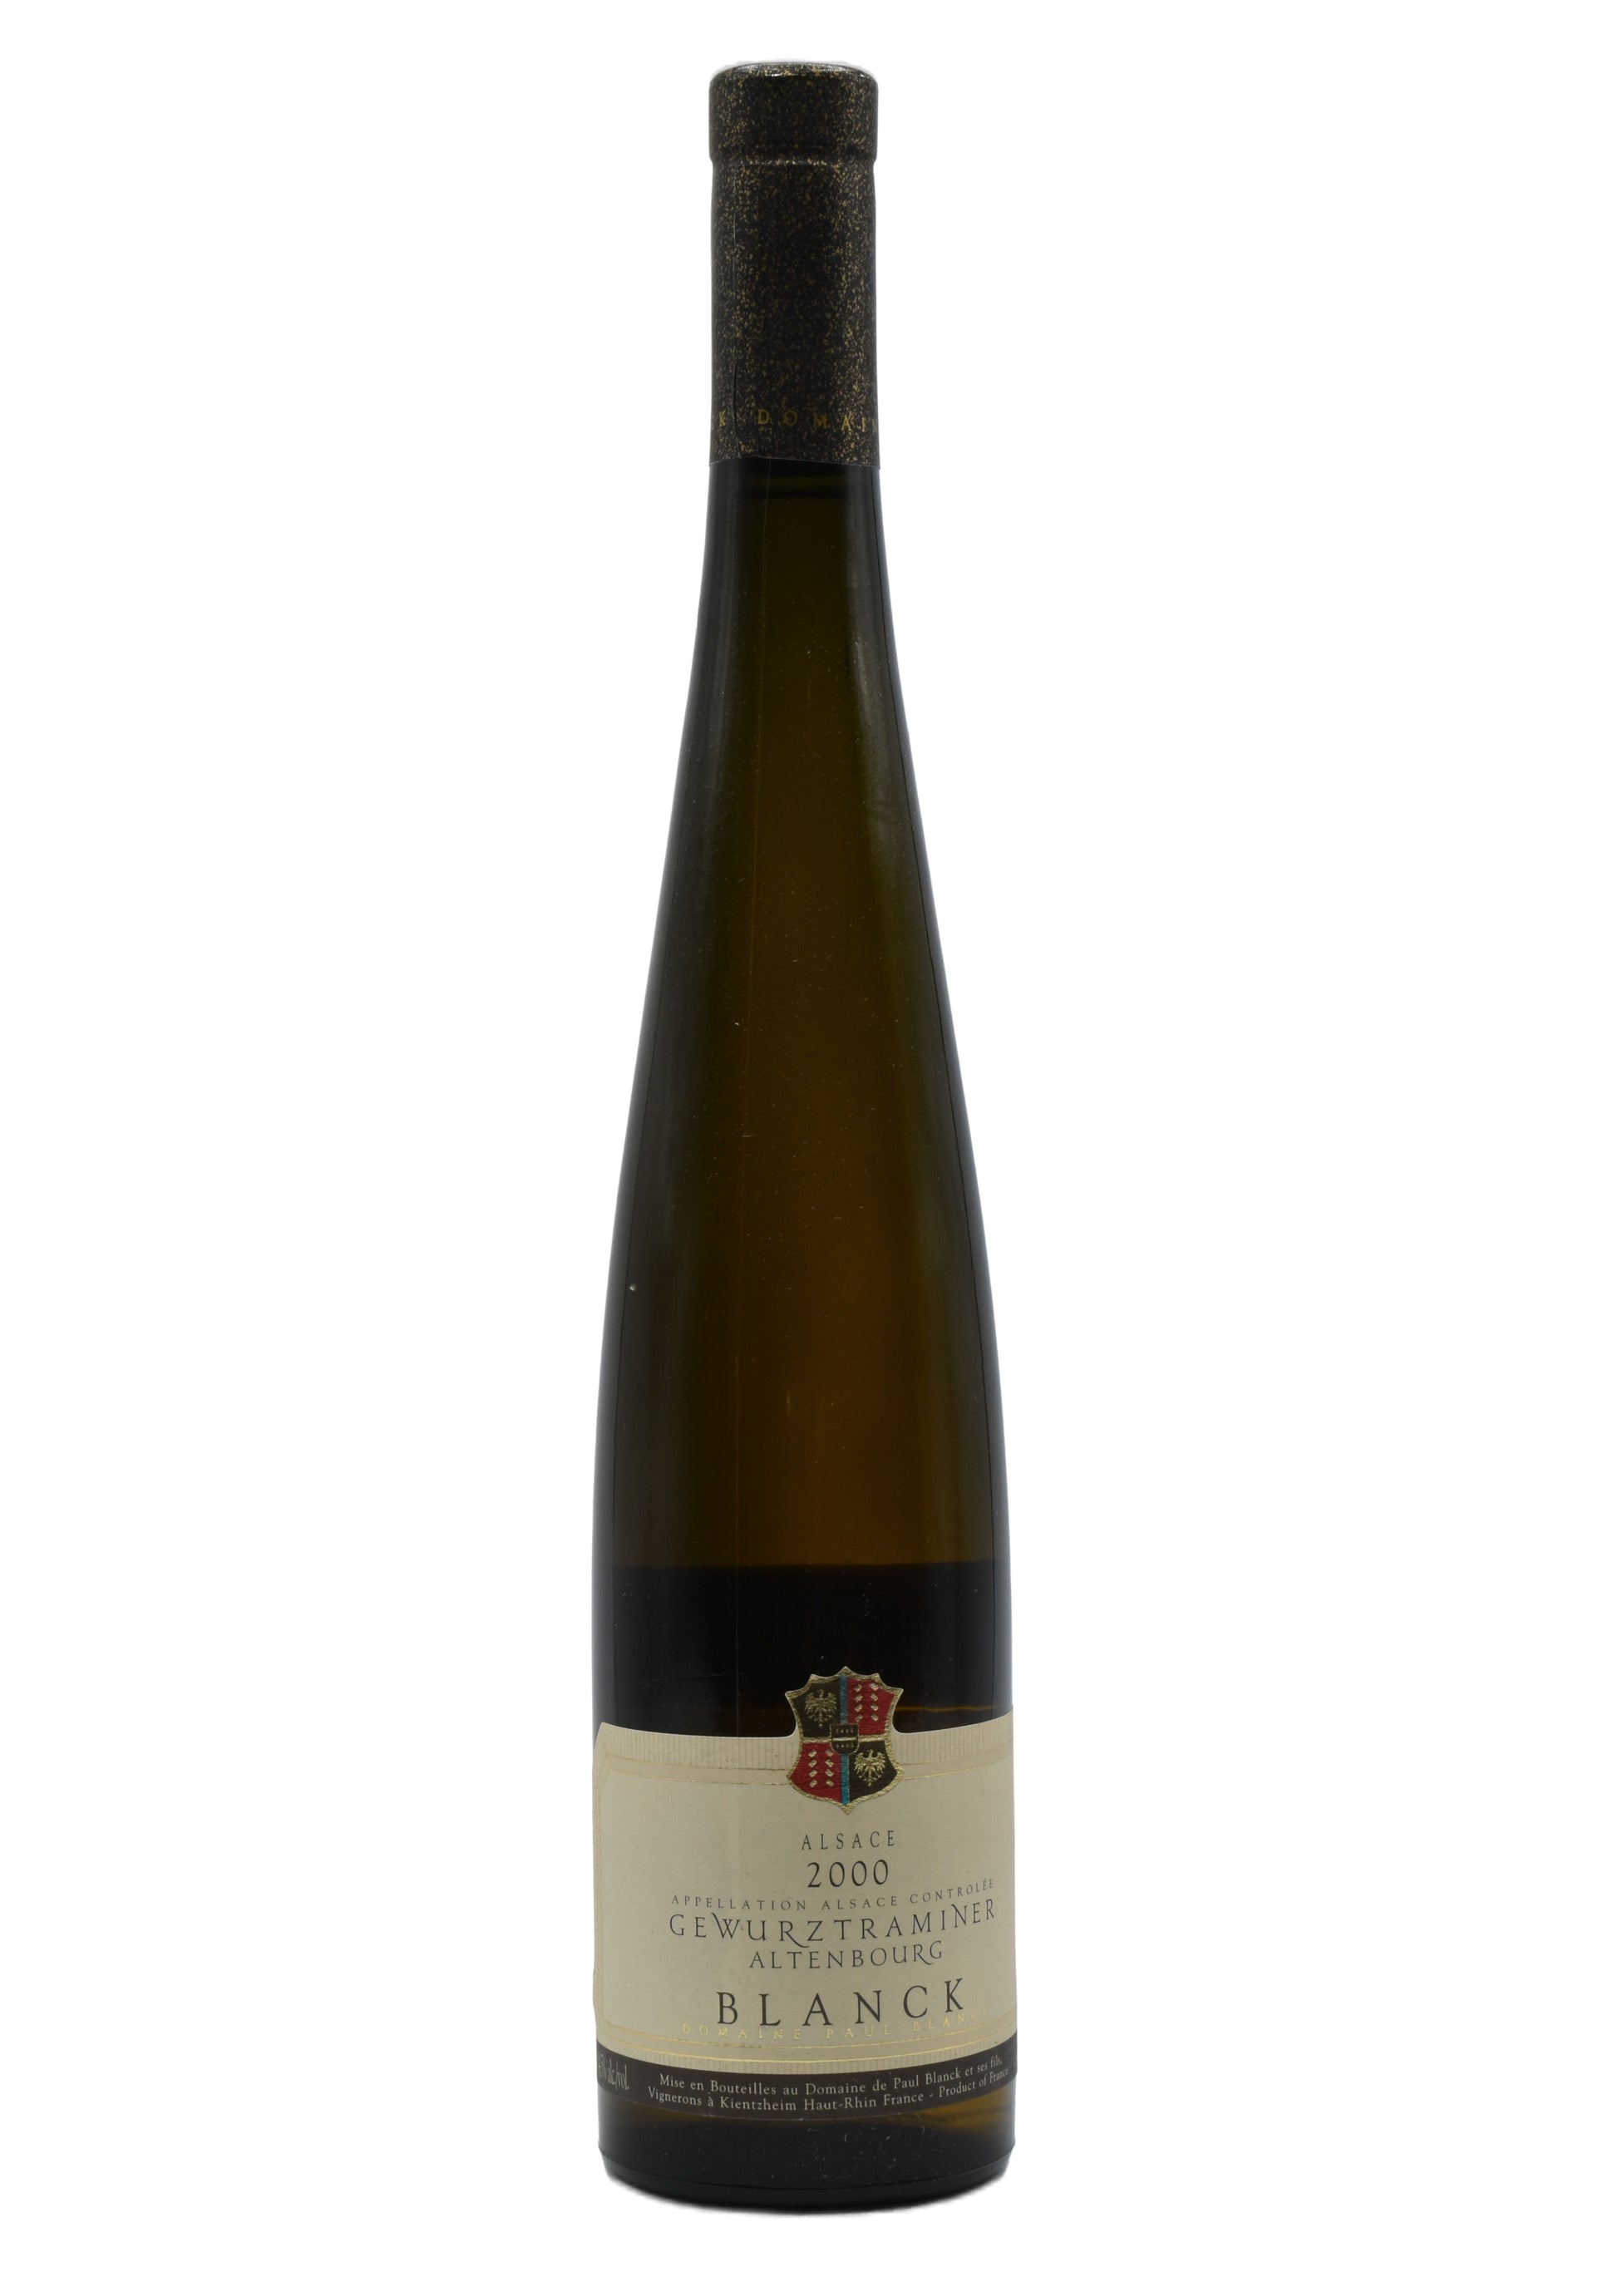 2000 Paul Blanck Gewurztraminer Altenbourg 750ml - Walker Wine Co.